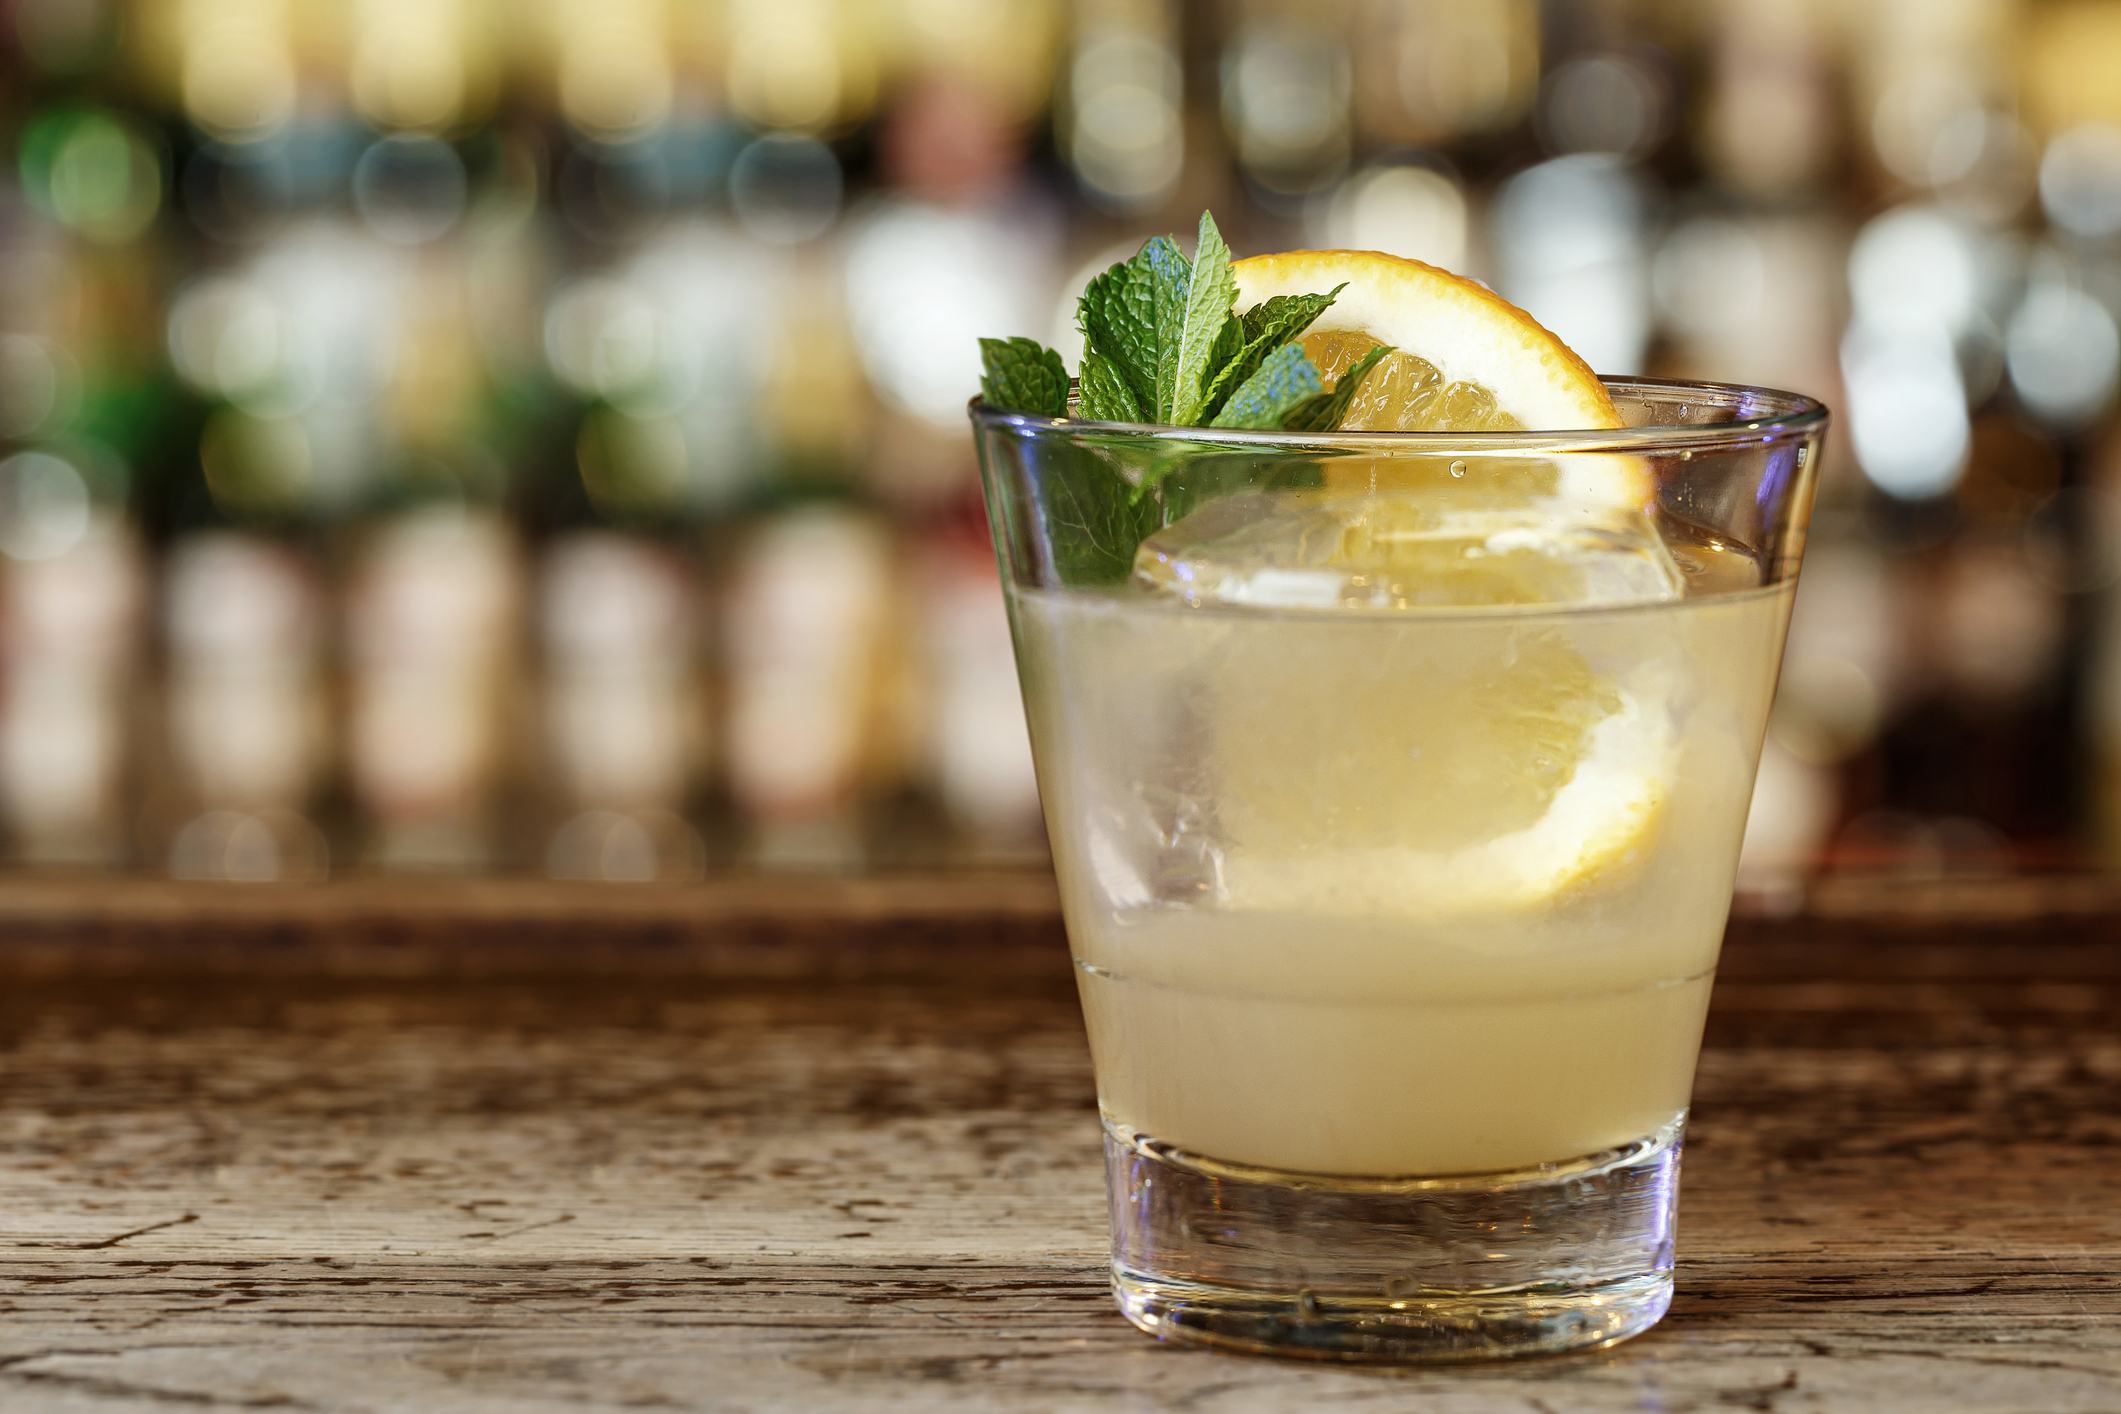 Classic American cocktail Southside based on gin, lemon juice, vodka